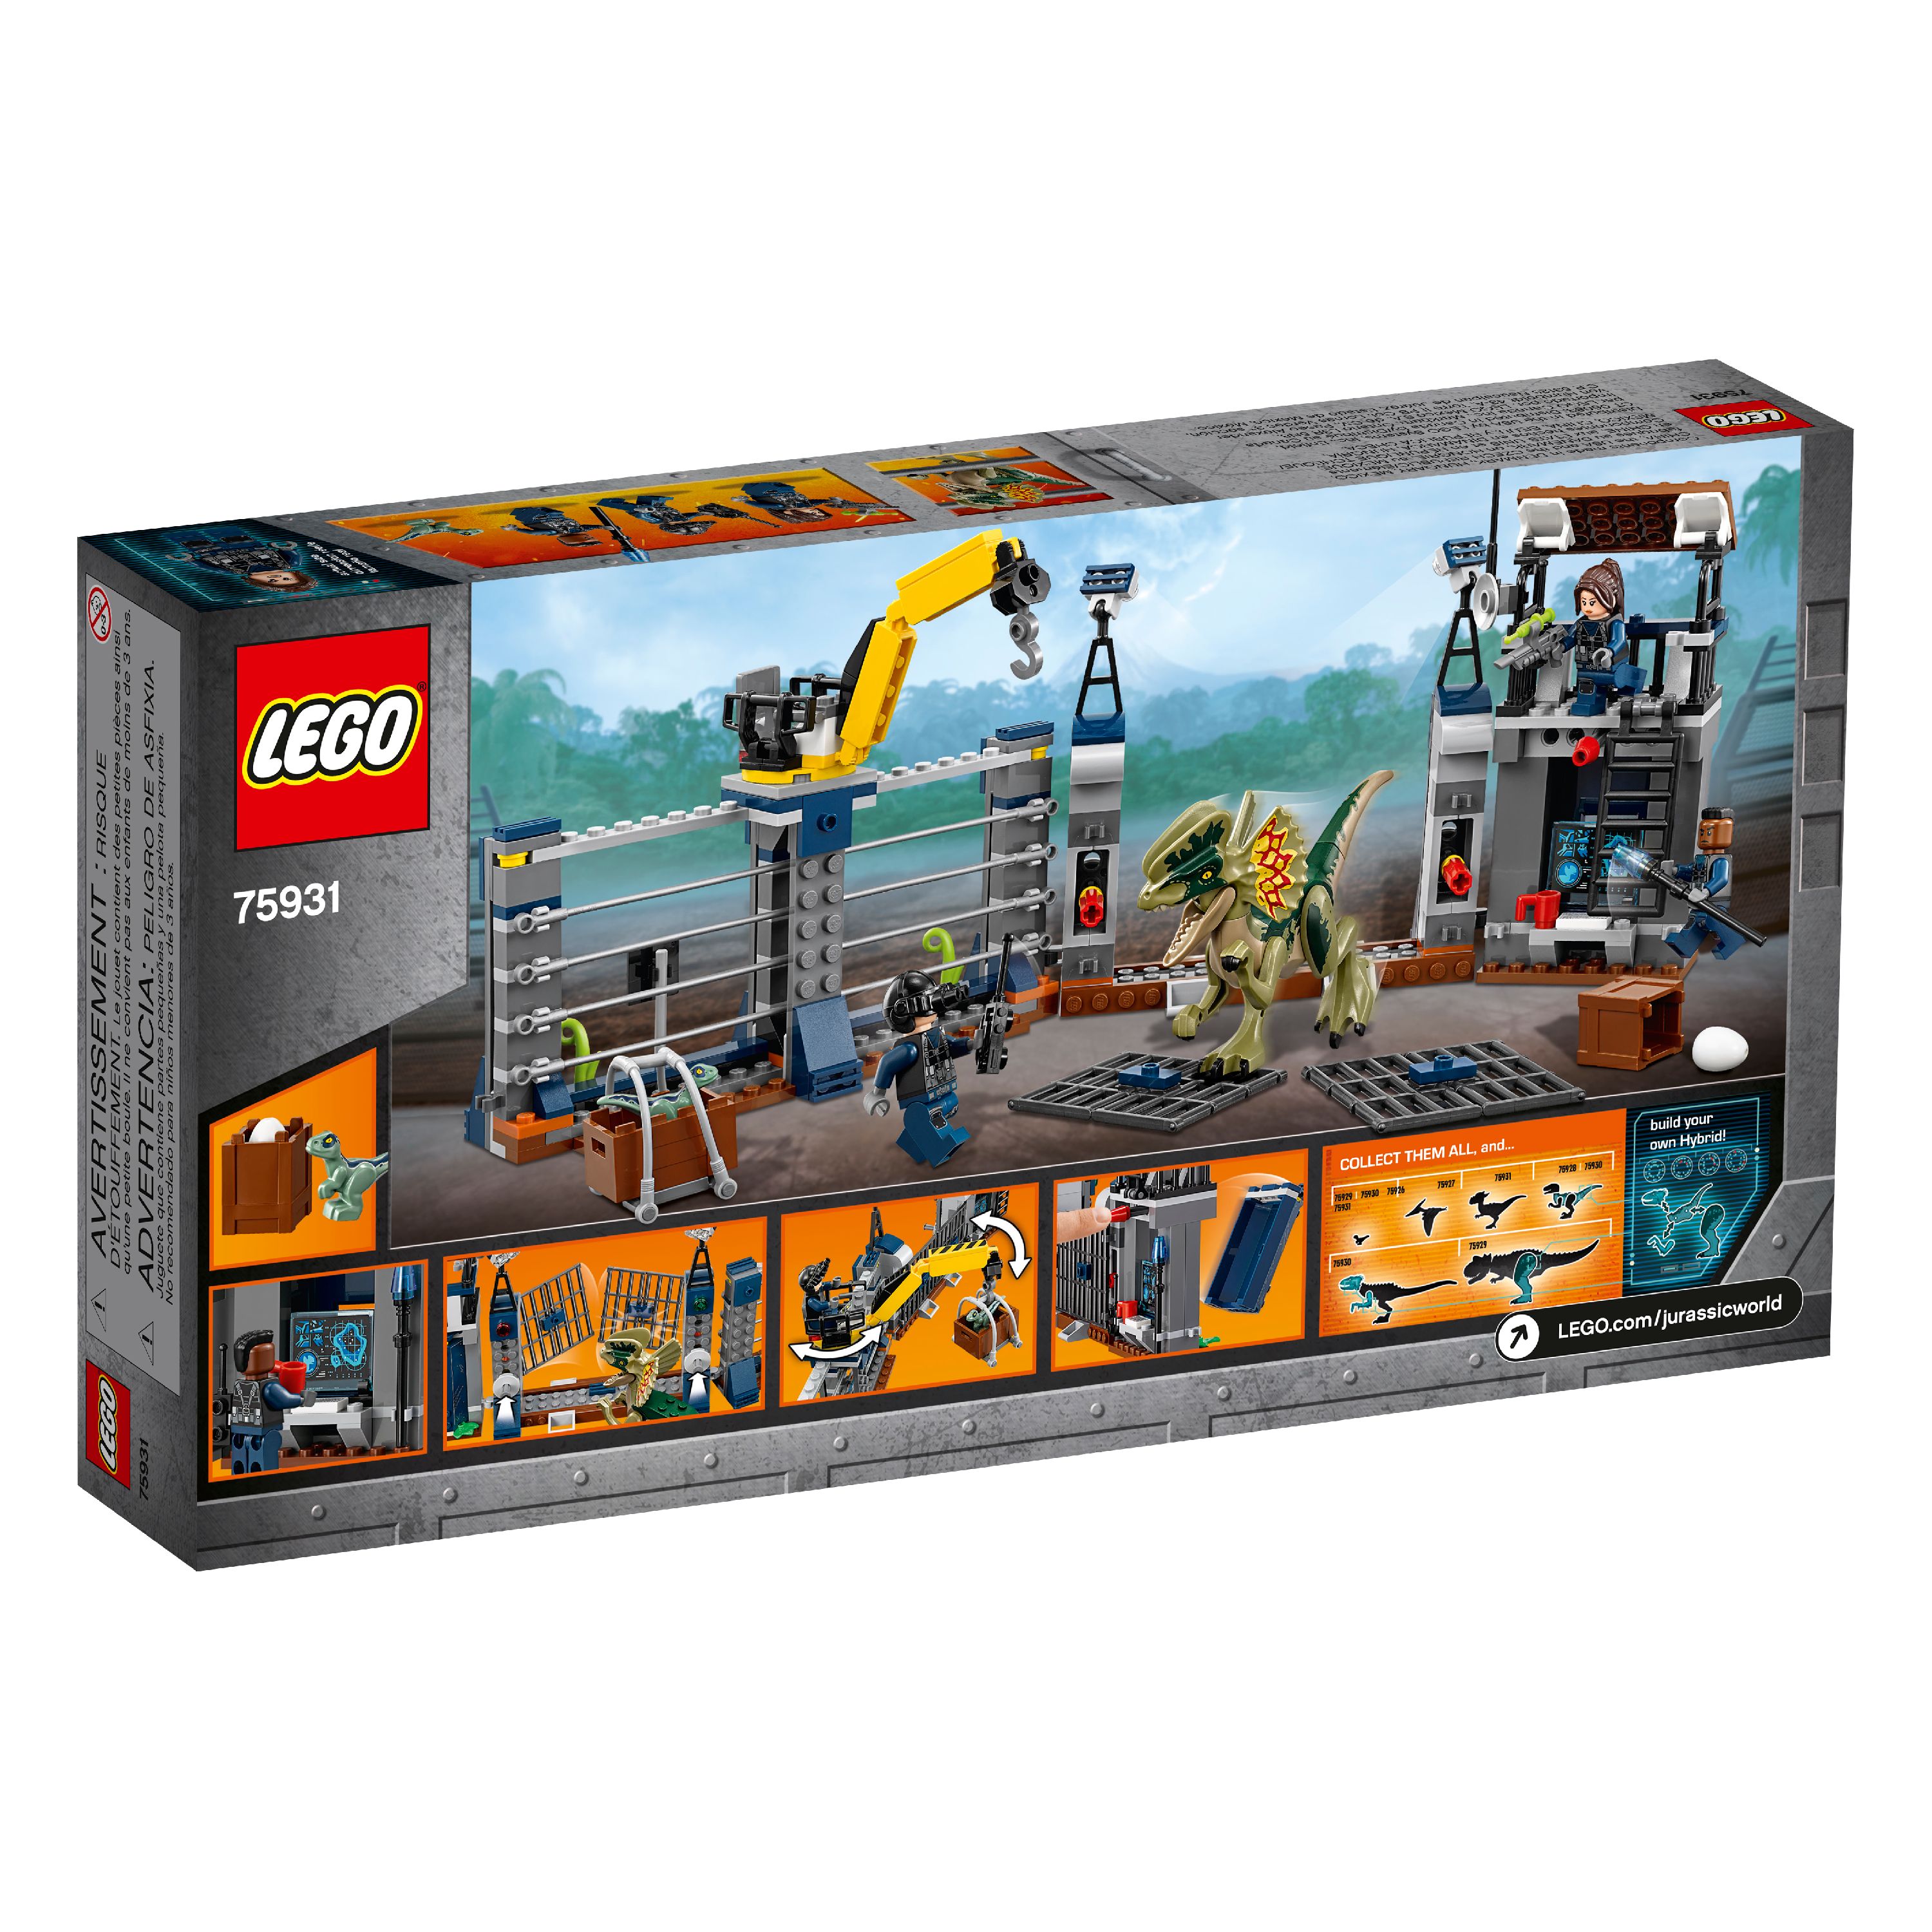 Lego jurassic world sets 2020